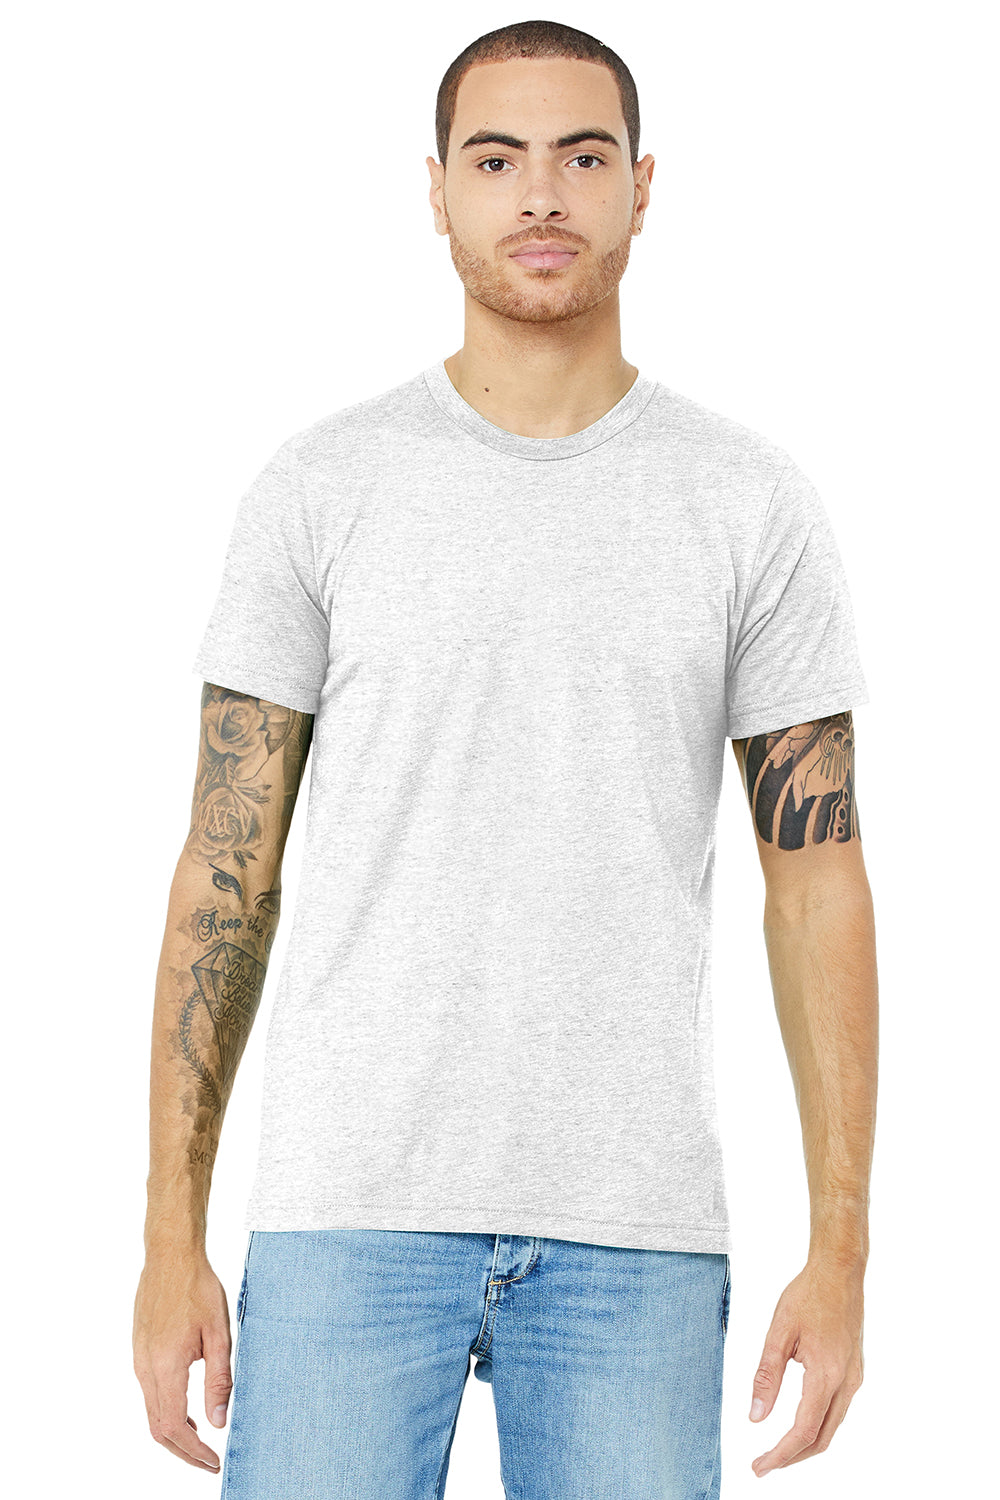 Bella + Canvas BC3413/3413C/3413 Mens Short Sleeve Crewneck T-Shirt White Fleck Model Front